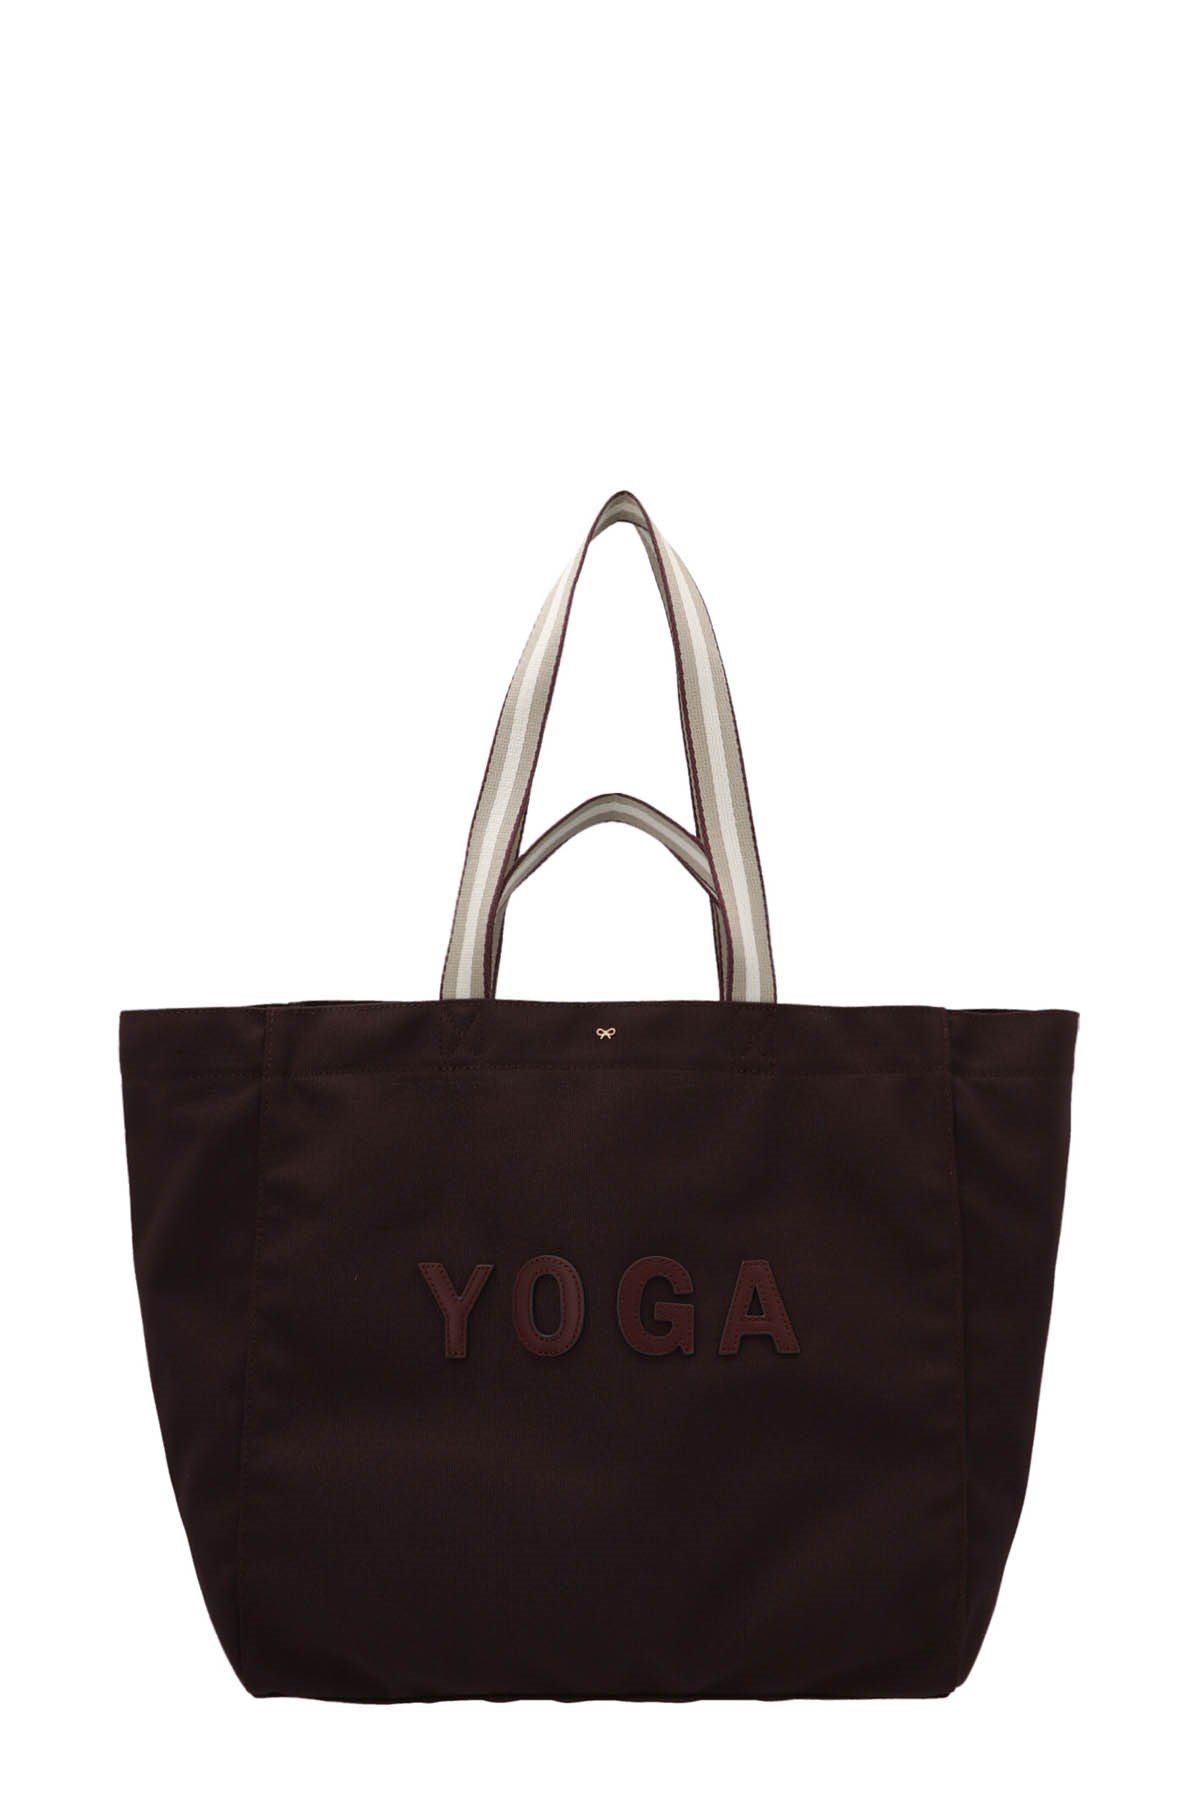 ANYA HINDMARCH 'Household Yoga' Shopping Bag